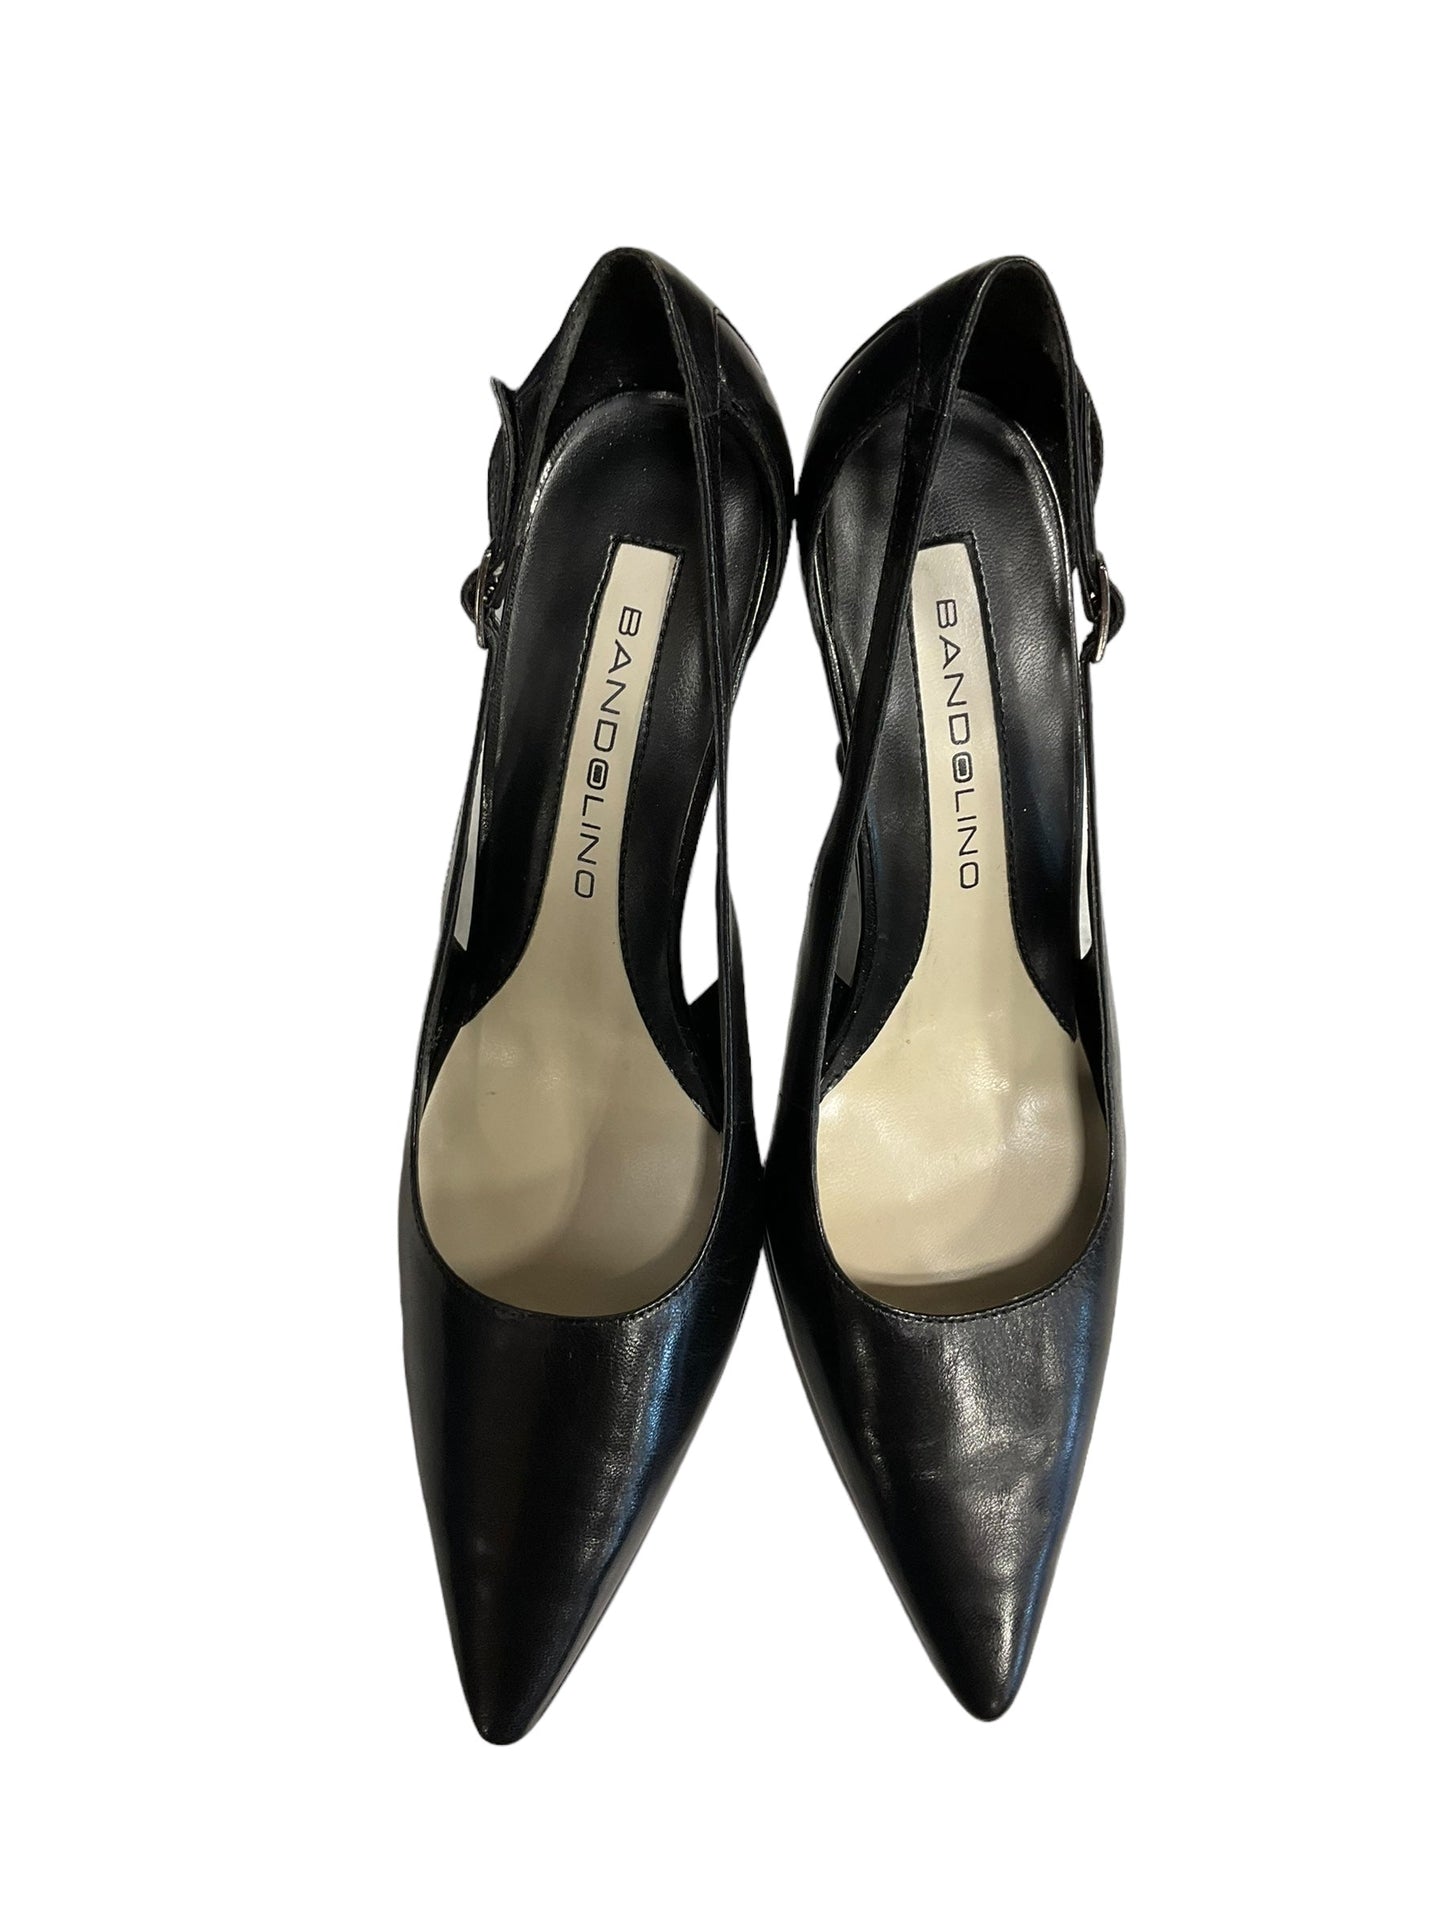 Black Shoes Heels Stiletto Bandolino, Size 7